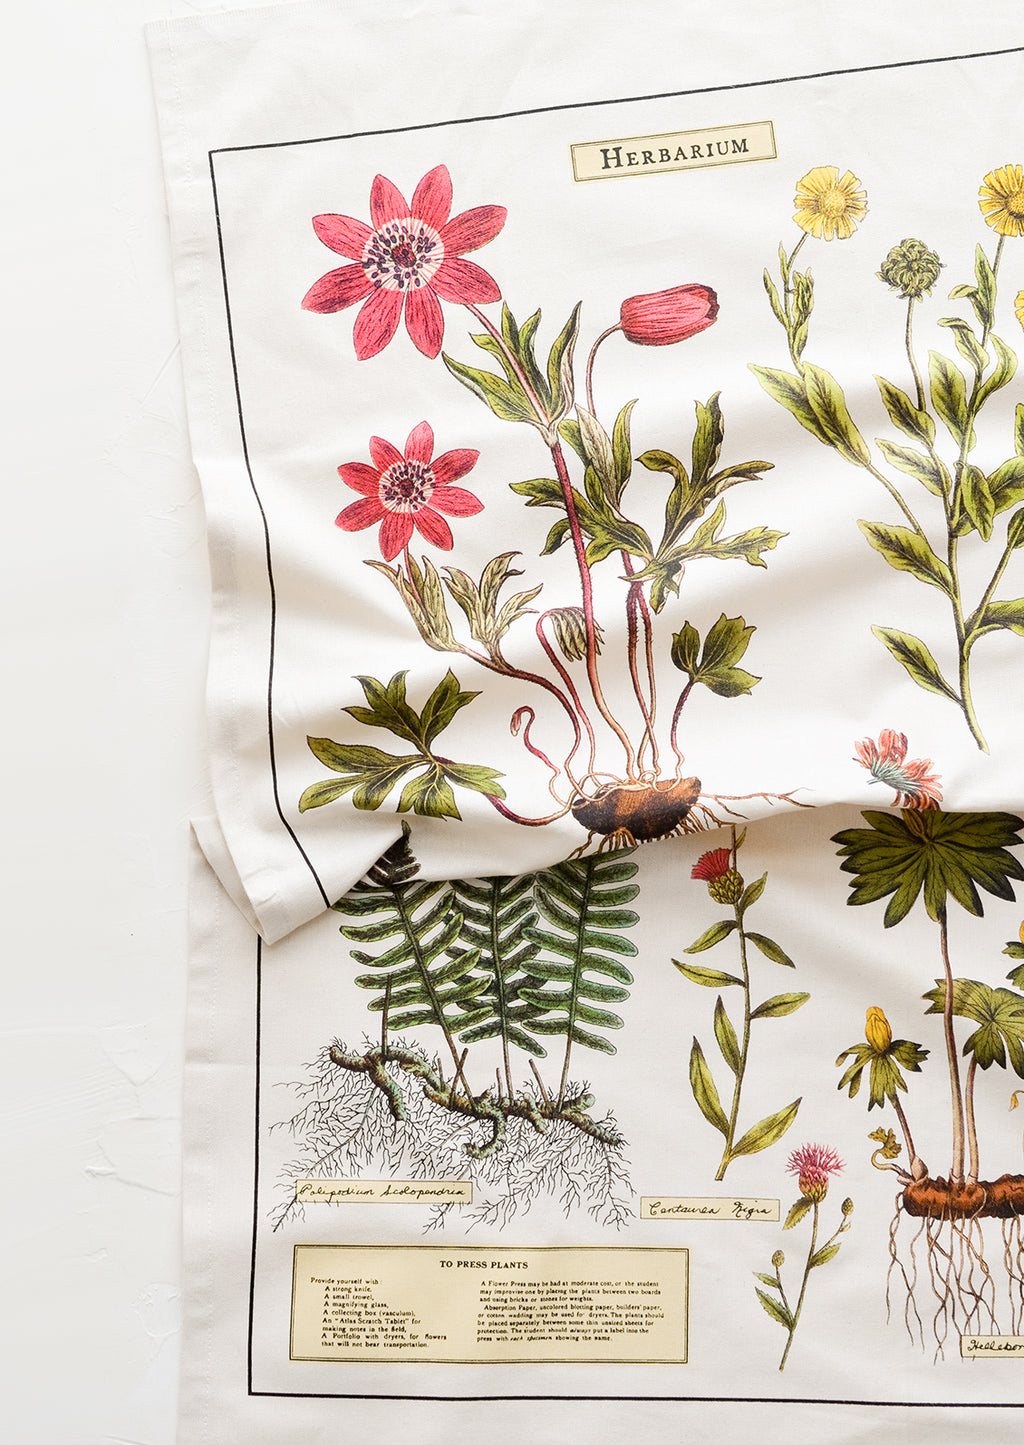 1: A cotton tea towel with colorful herbarium plant print.